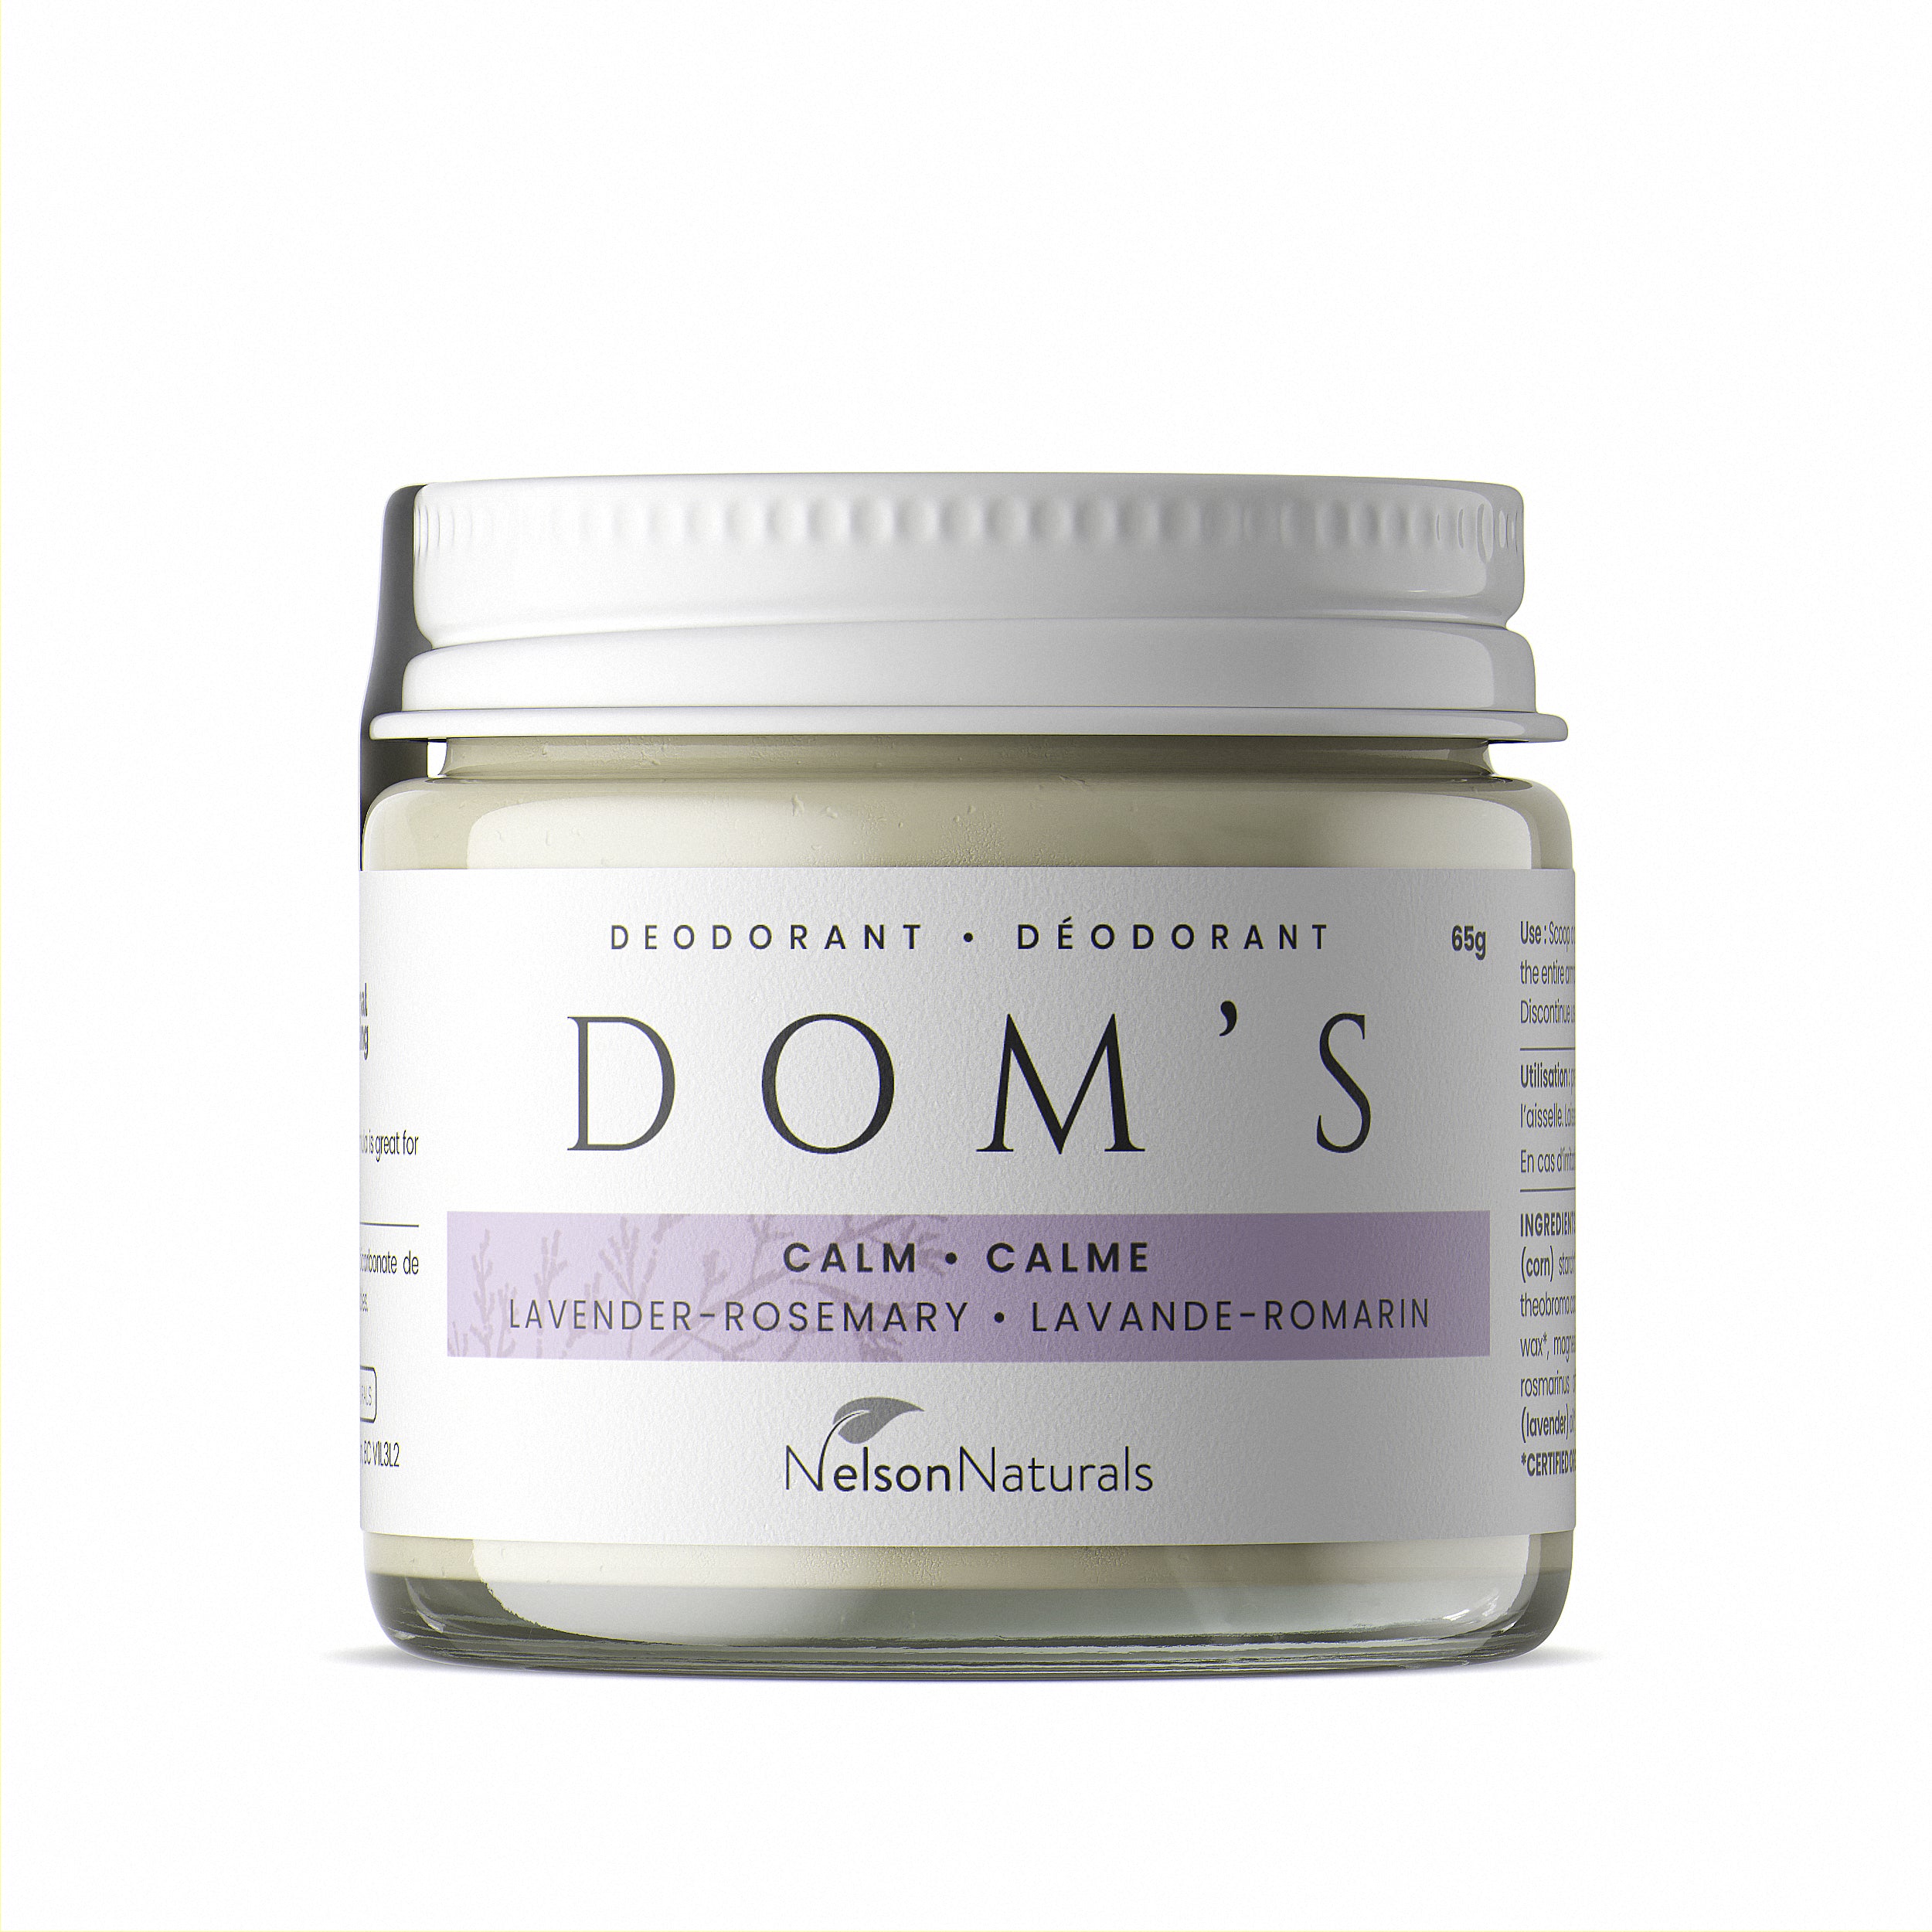 Dom's Deodorant - Calm 65g - WHOLESALE Deodorant - nelsonnaturals remineralizing toothpaste